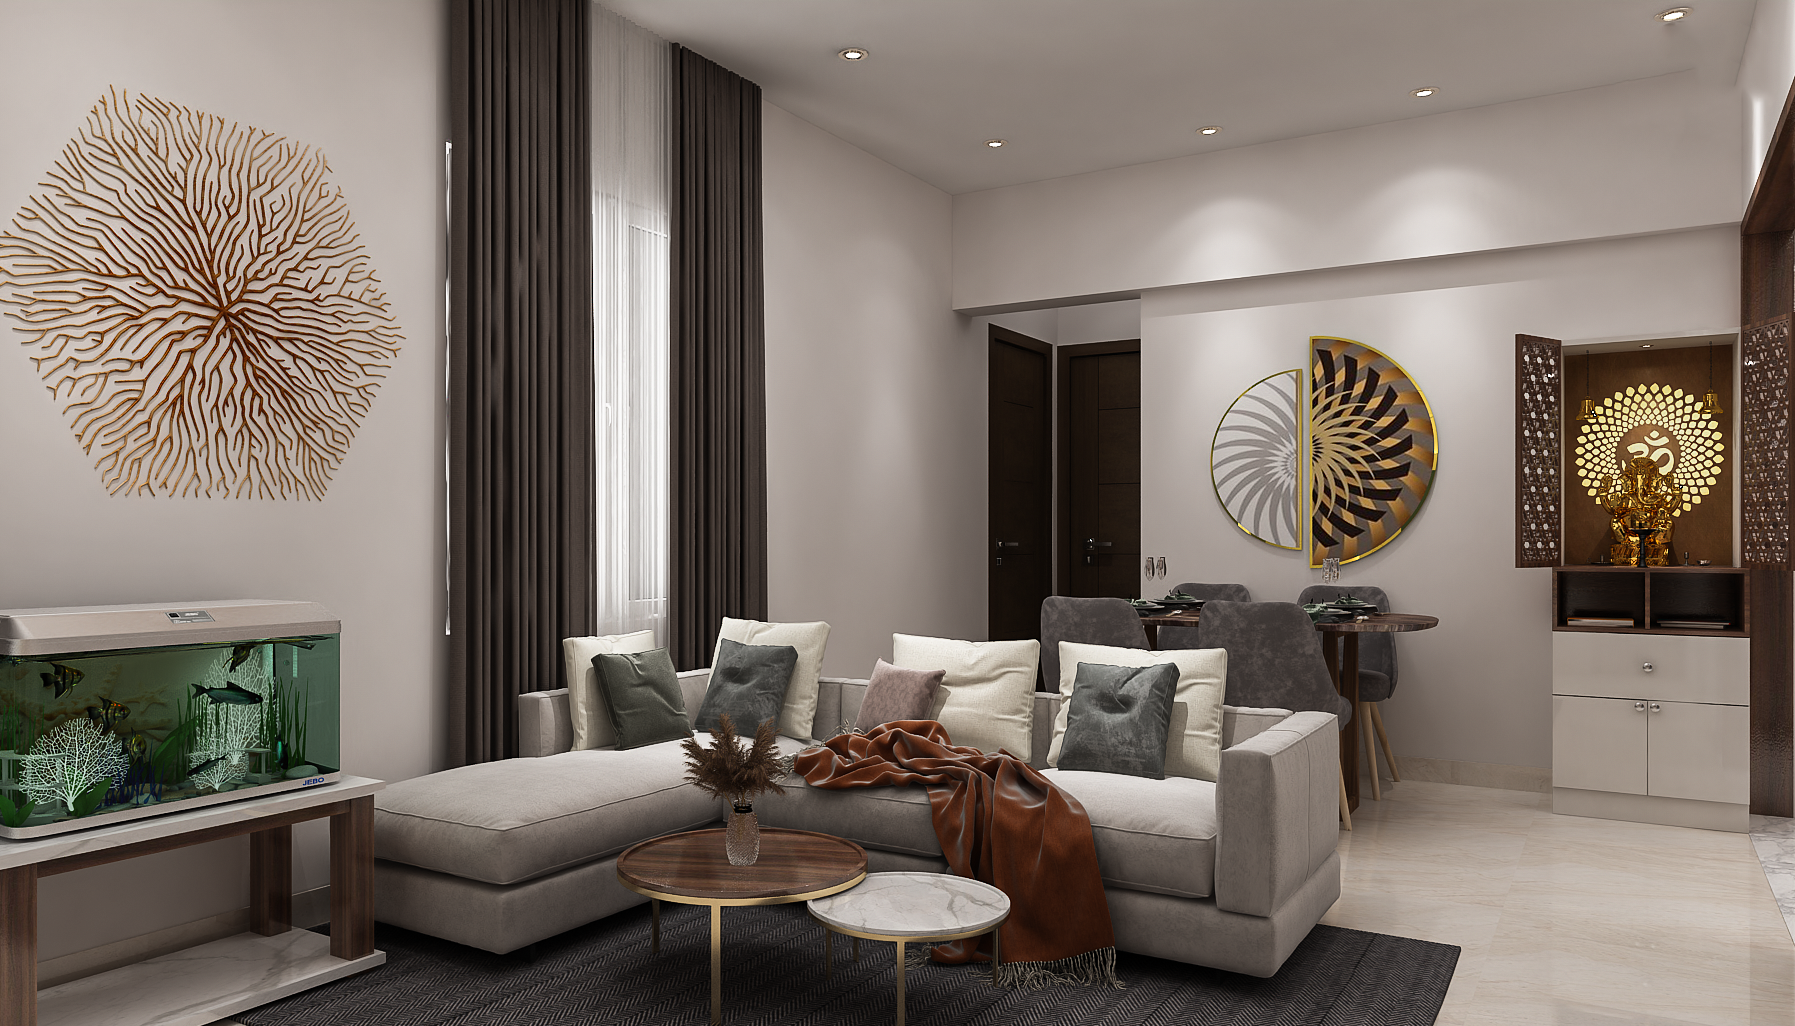 Spacious Contemporary Living Room Design With L-Shaped Sofa